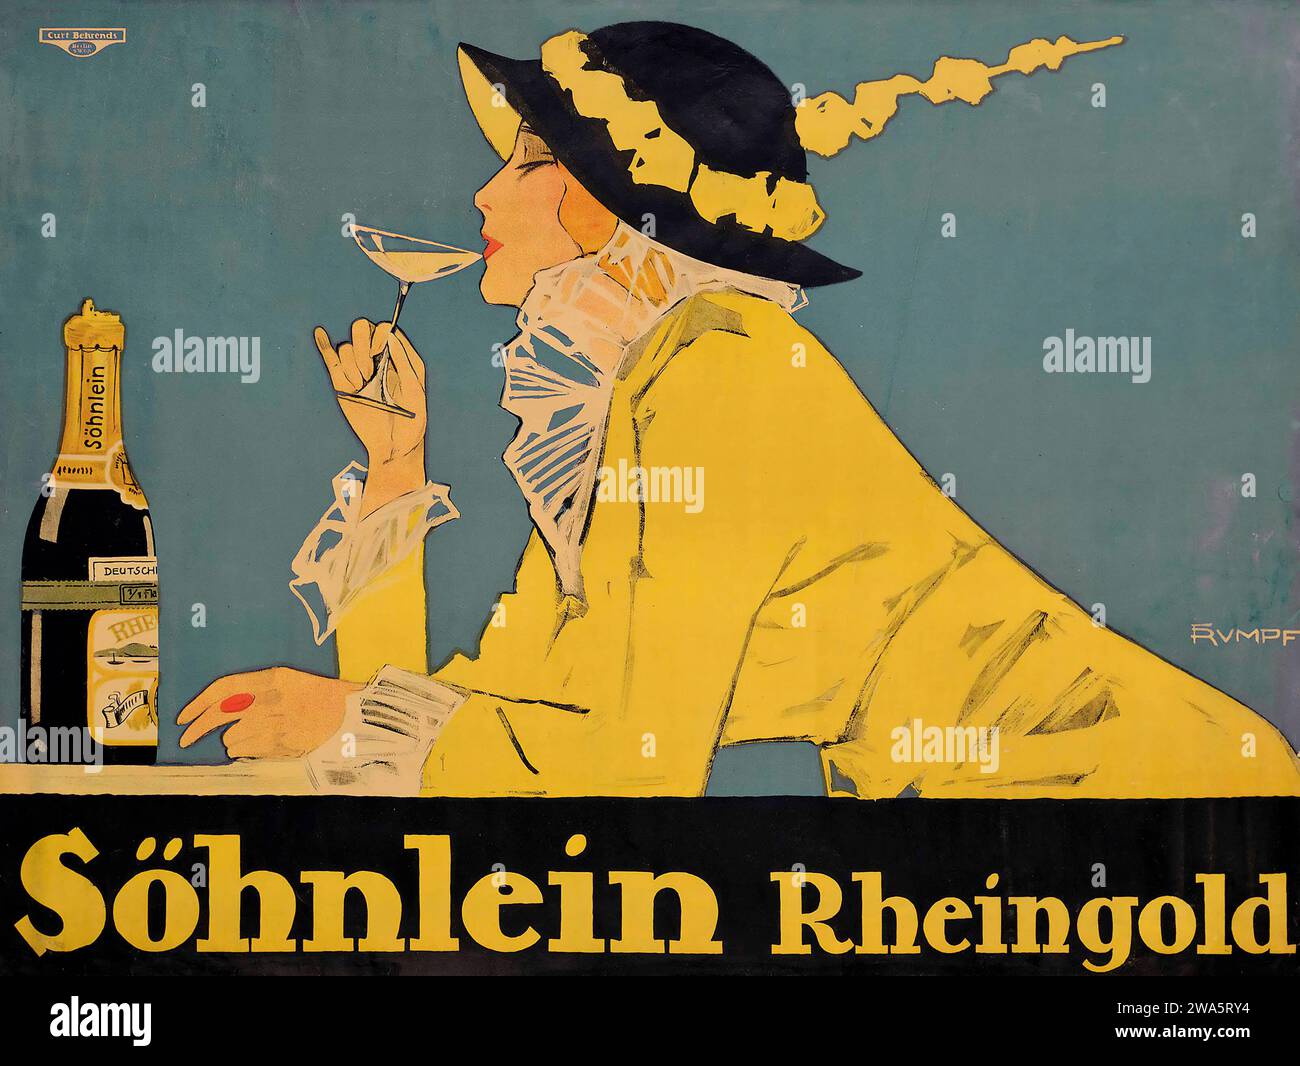 Fritz Carl G. Rumpf (1888-1949) SÖHNLEIN RHEINGOLD, vintage alcohol advertisement, 1914 Stock Photo